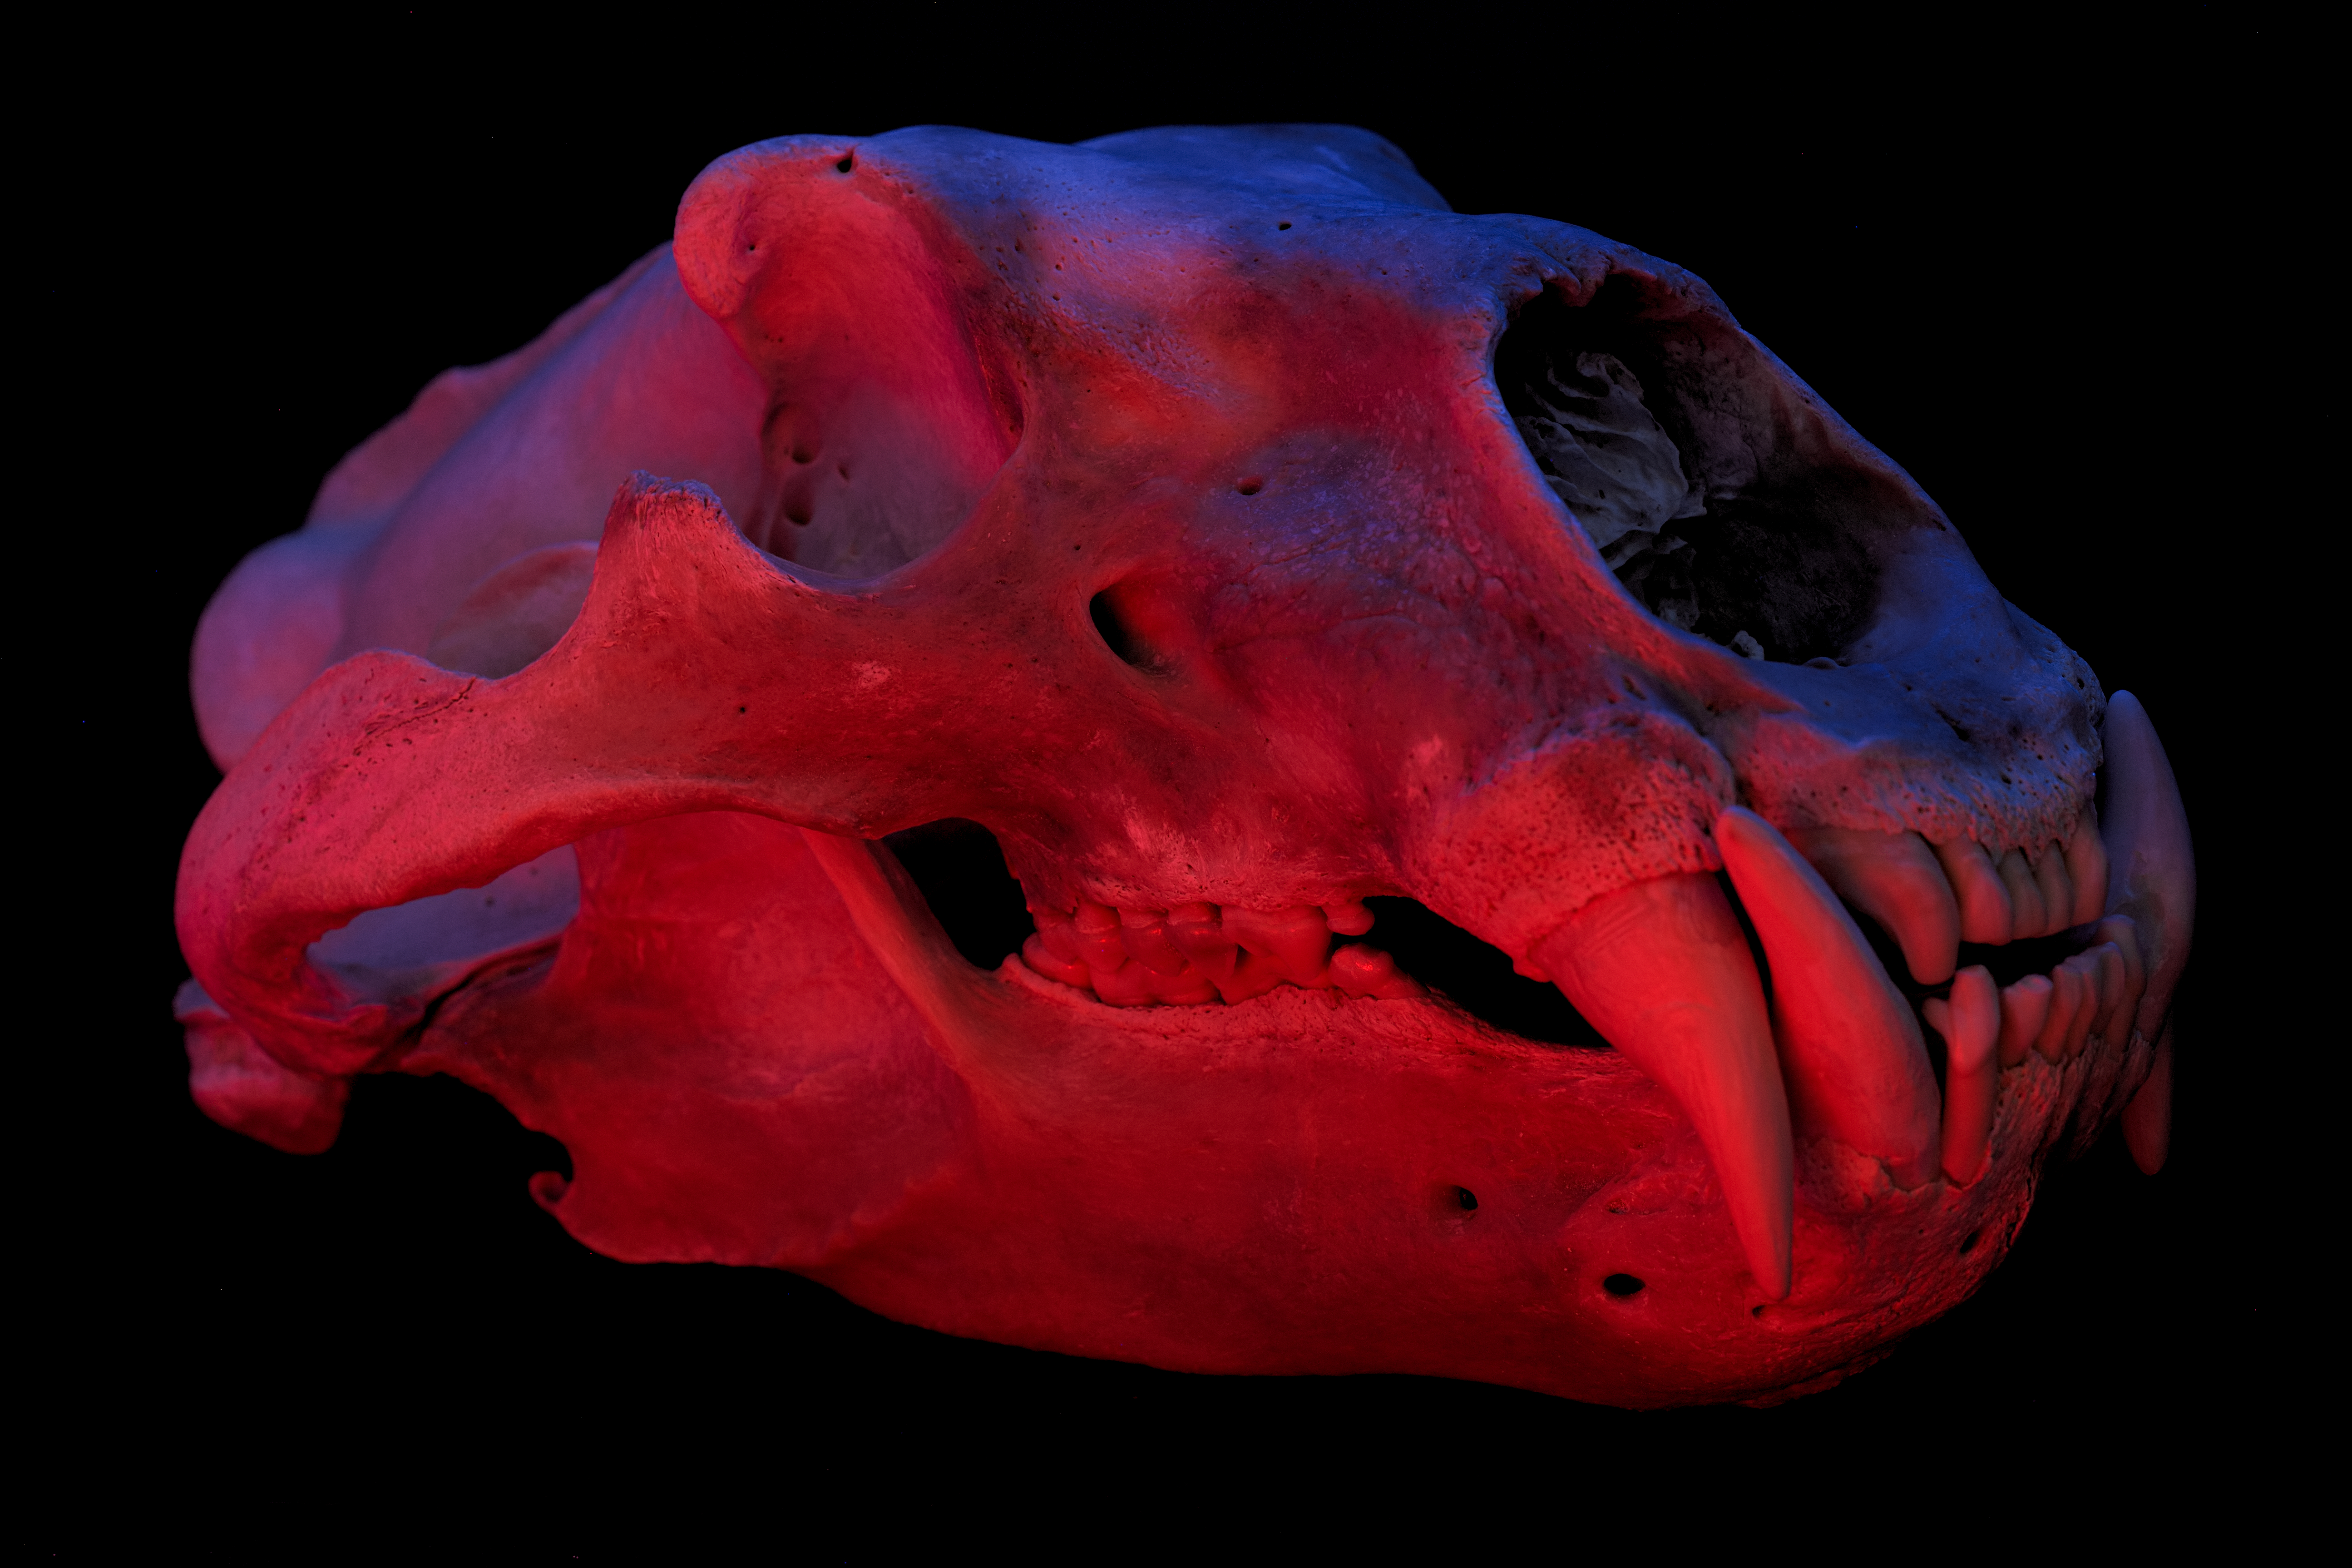 General 5180x3453 polar bears skull black background teeth colorful red